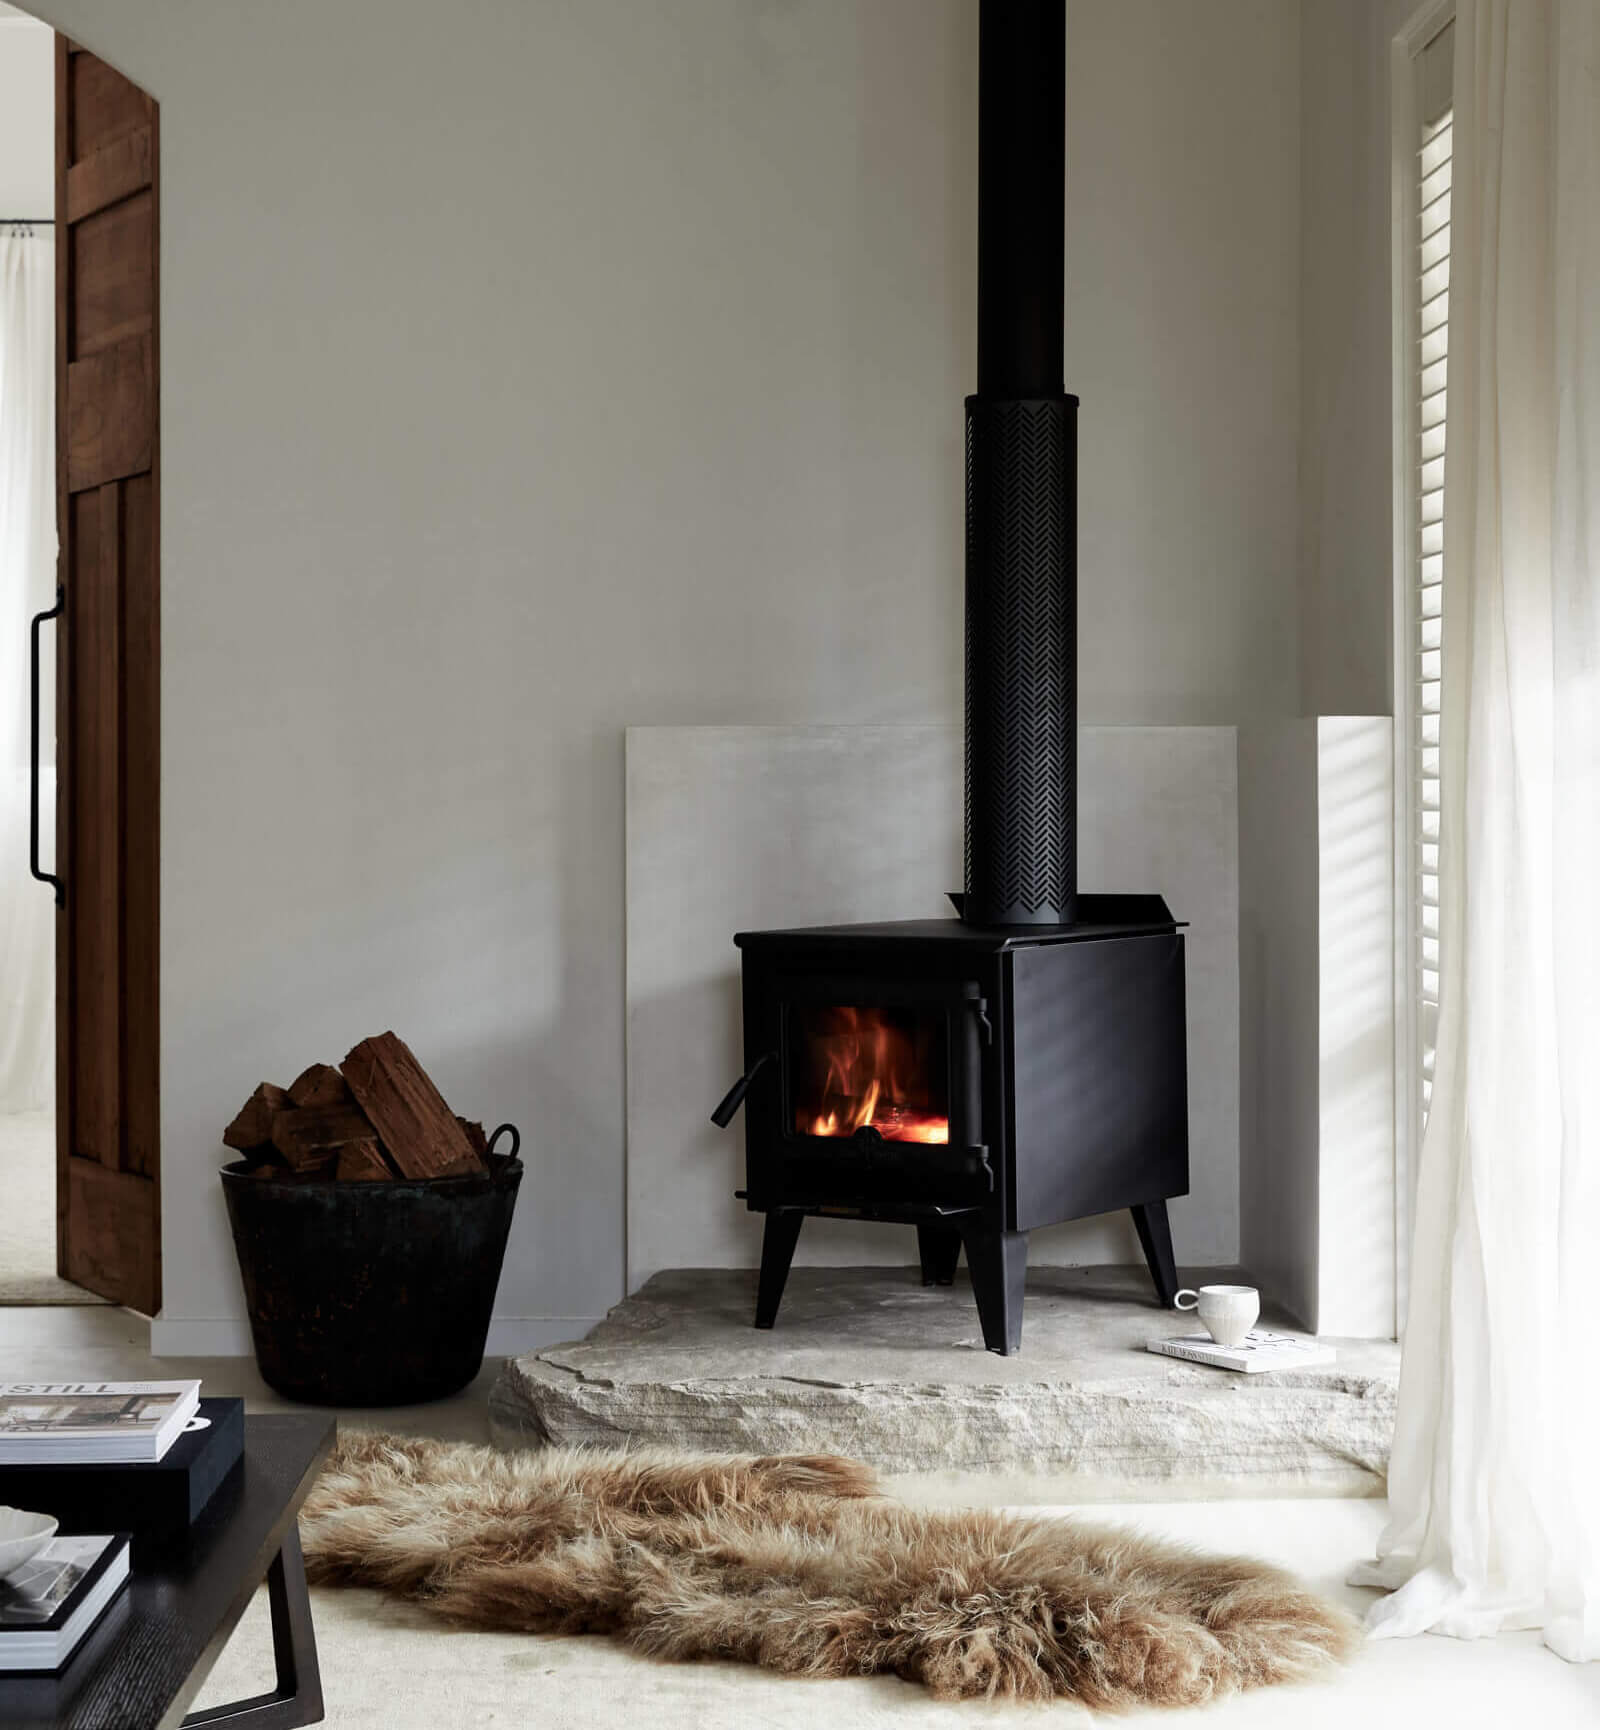 Le Viti Barn Newrybar: Indoor fireplace set on a stone hearth